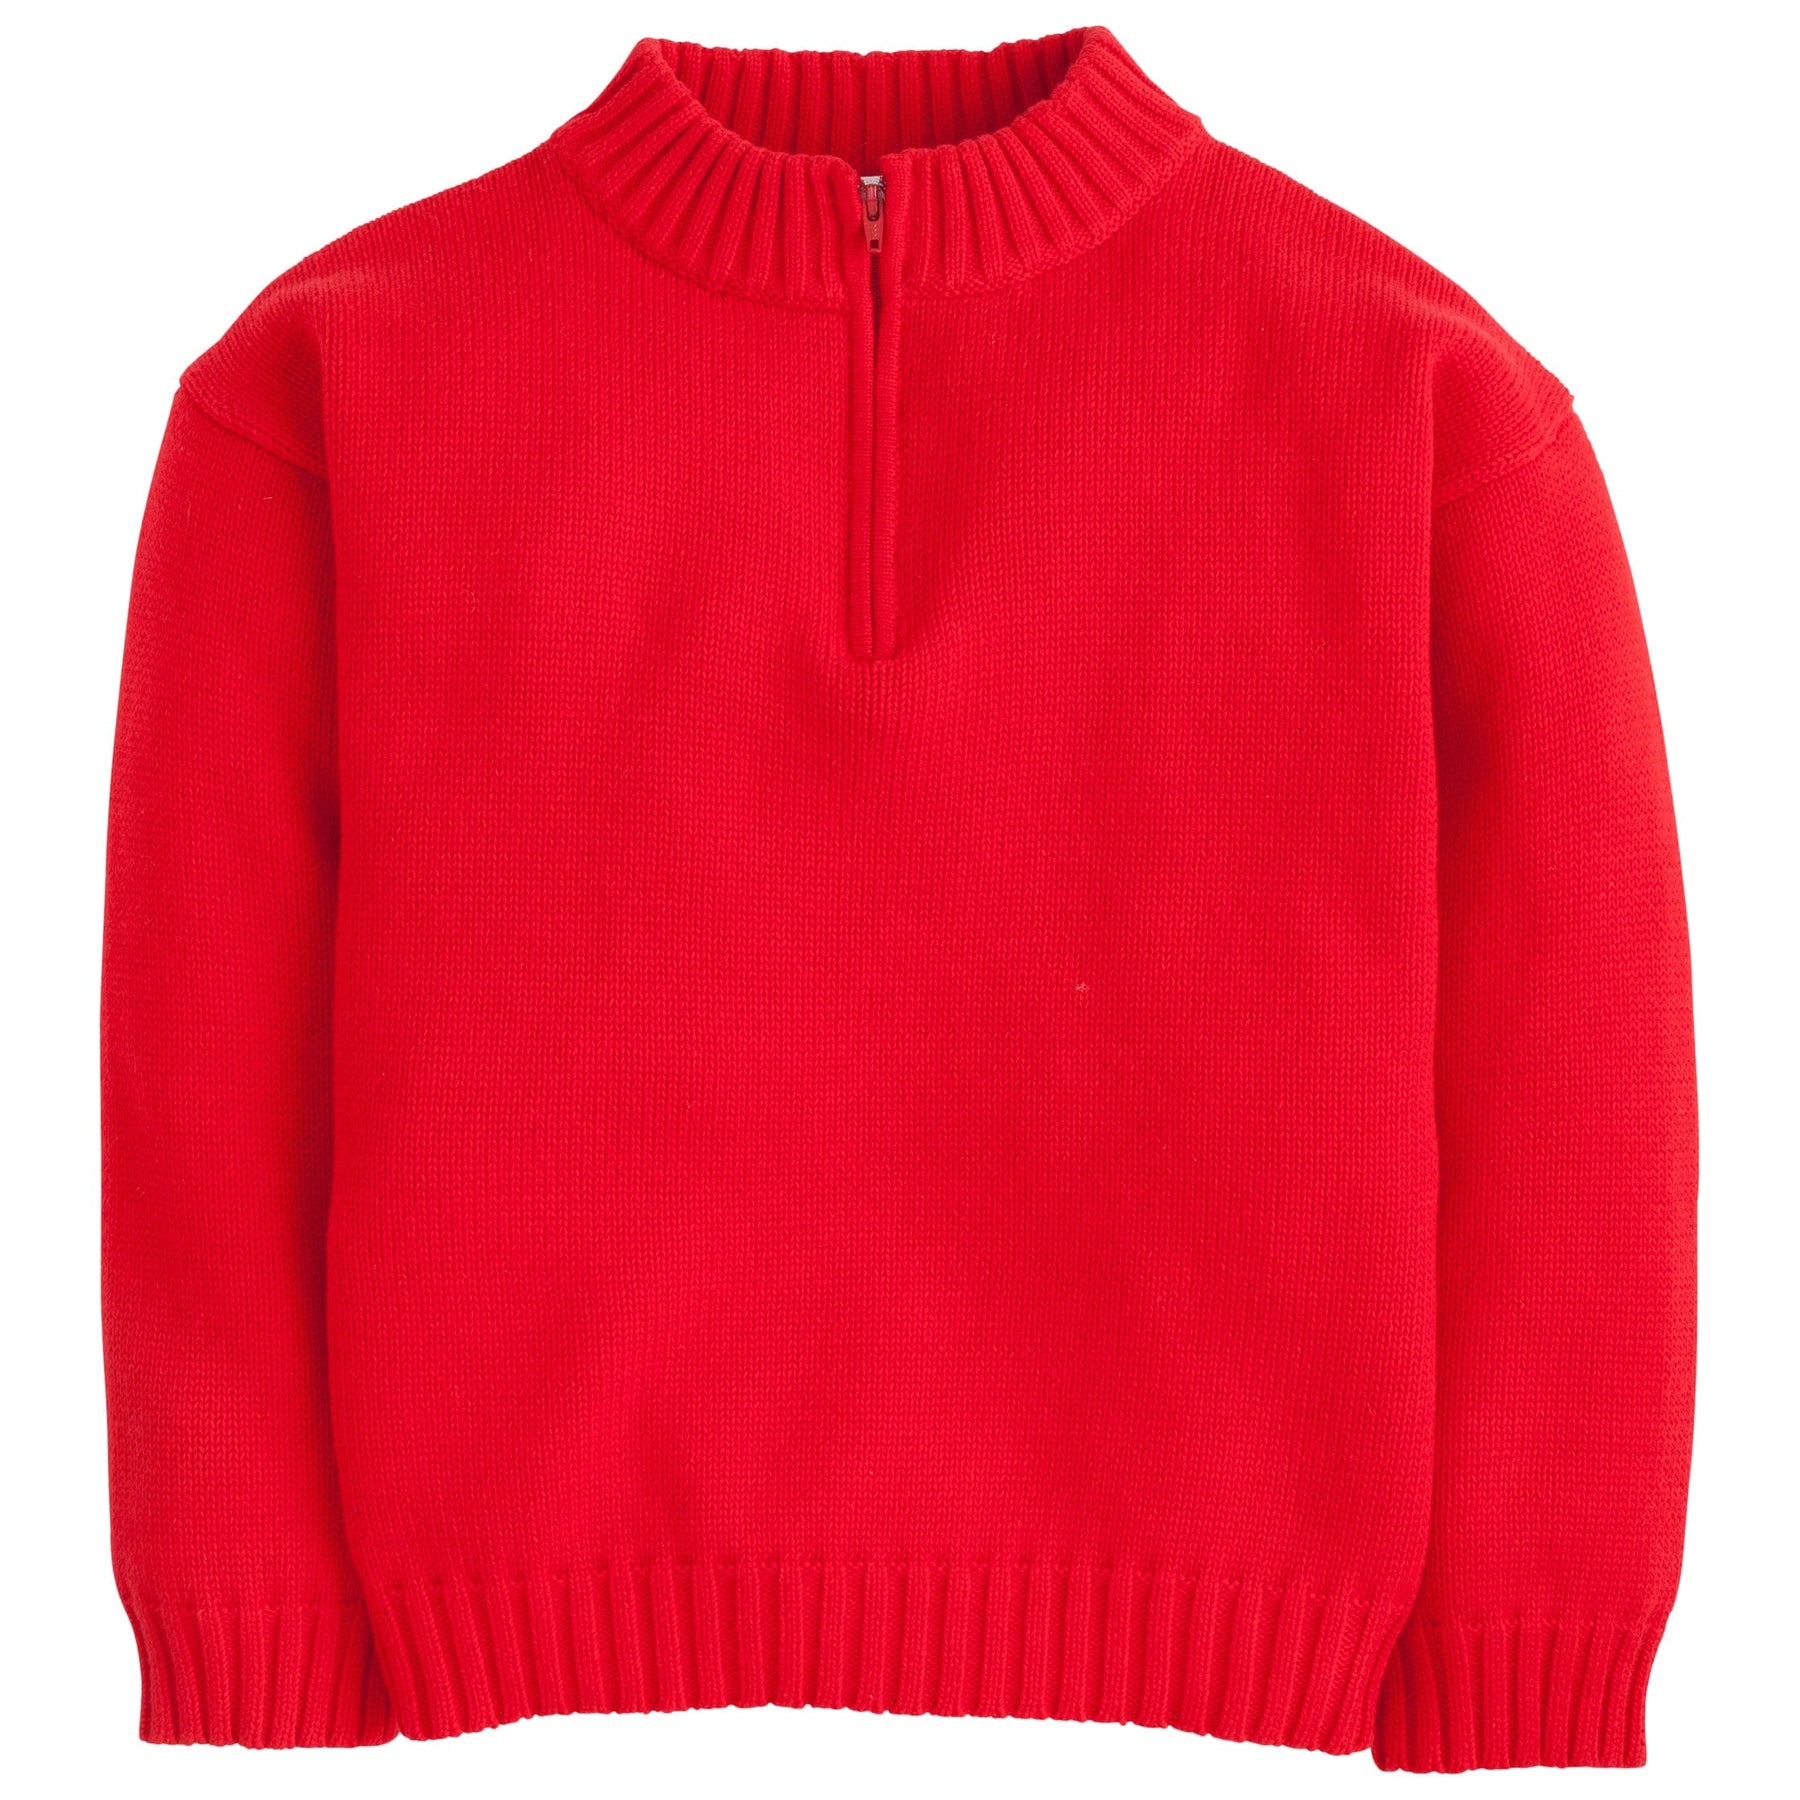 seguridadindustrialcr classic childrens clothing boys red quarter zip sweater